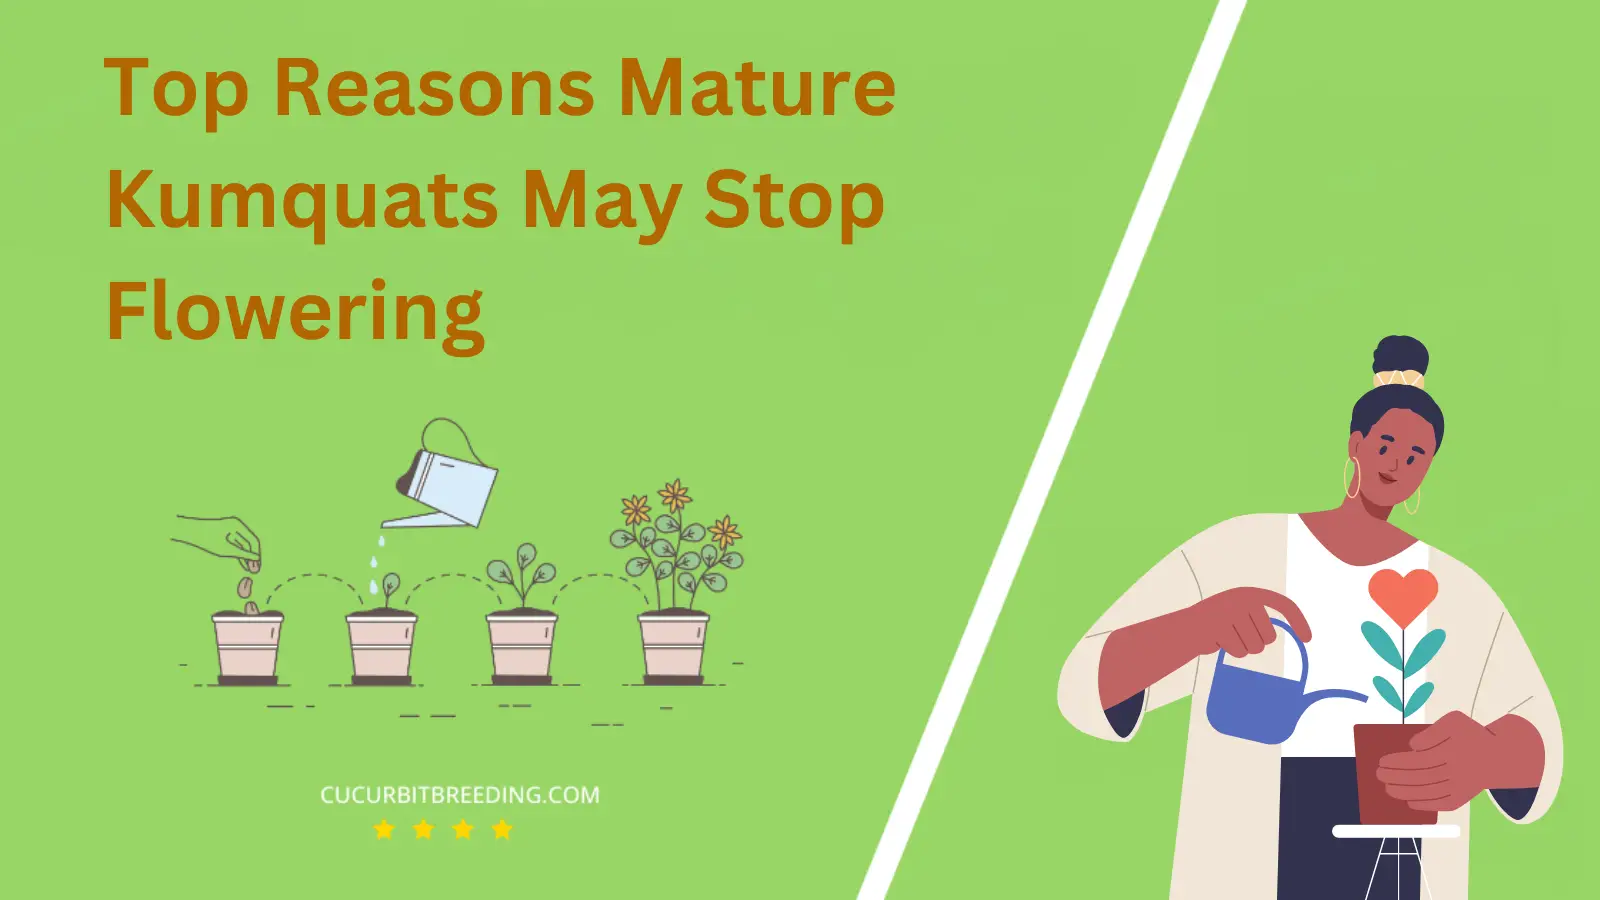 Top Reasons Mature Kumquats May Stop Flowering